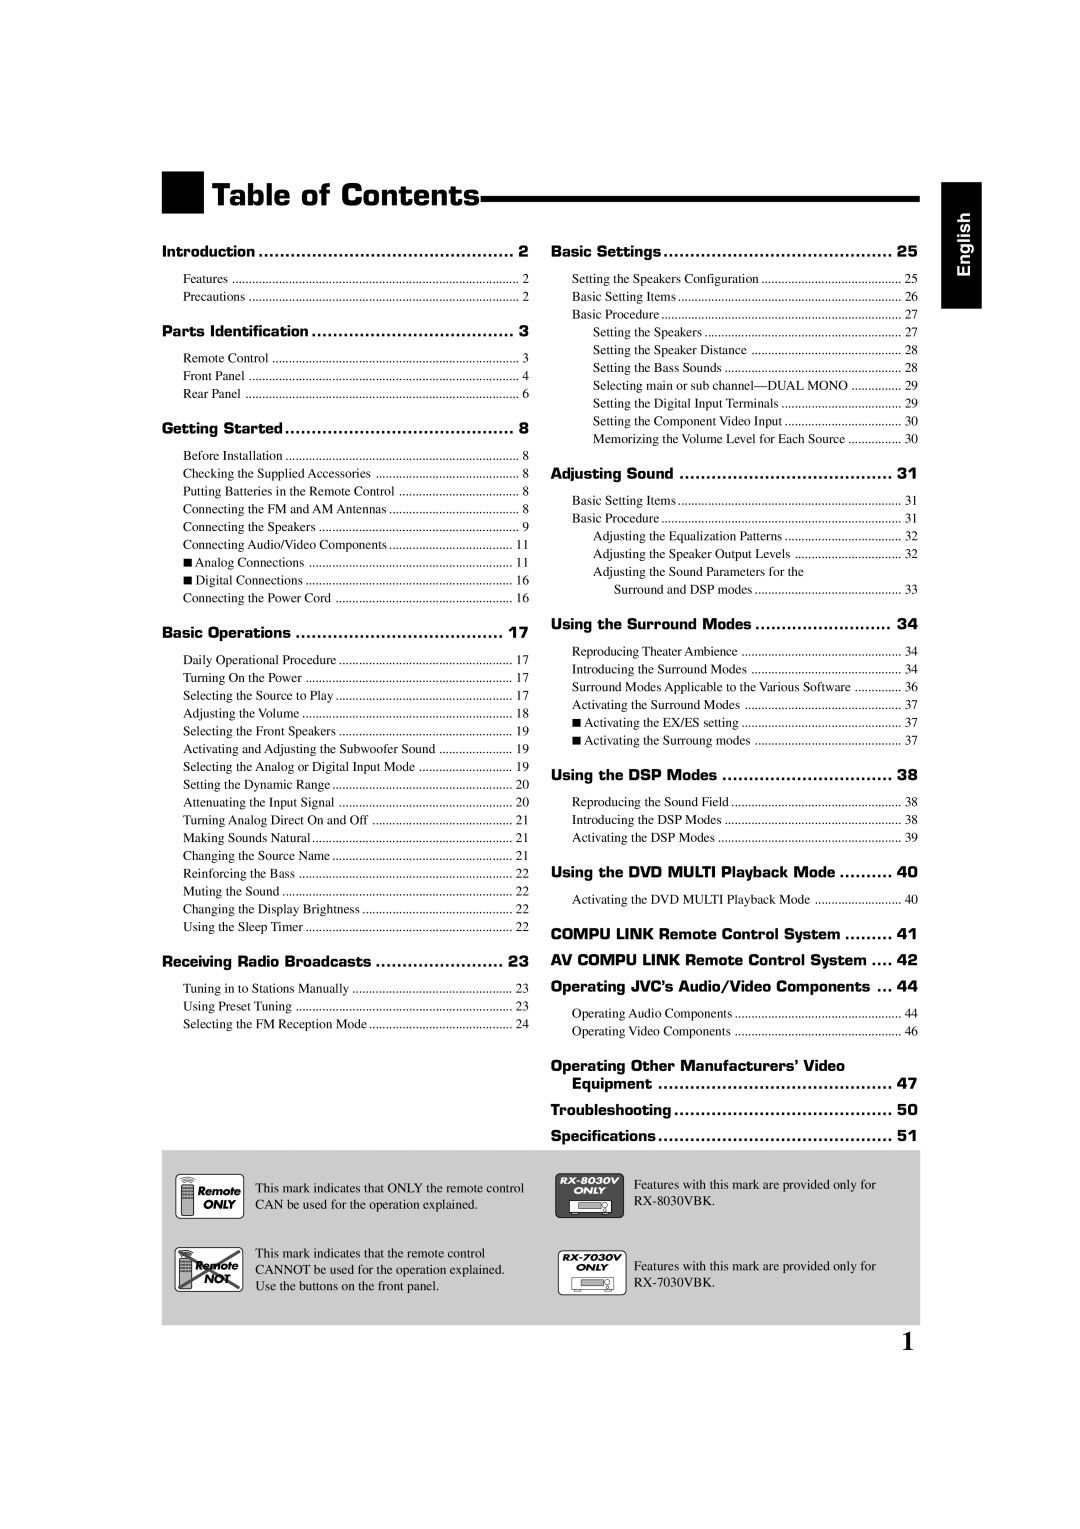 JVC RX7030VBK manual English, Table of Contents 